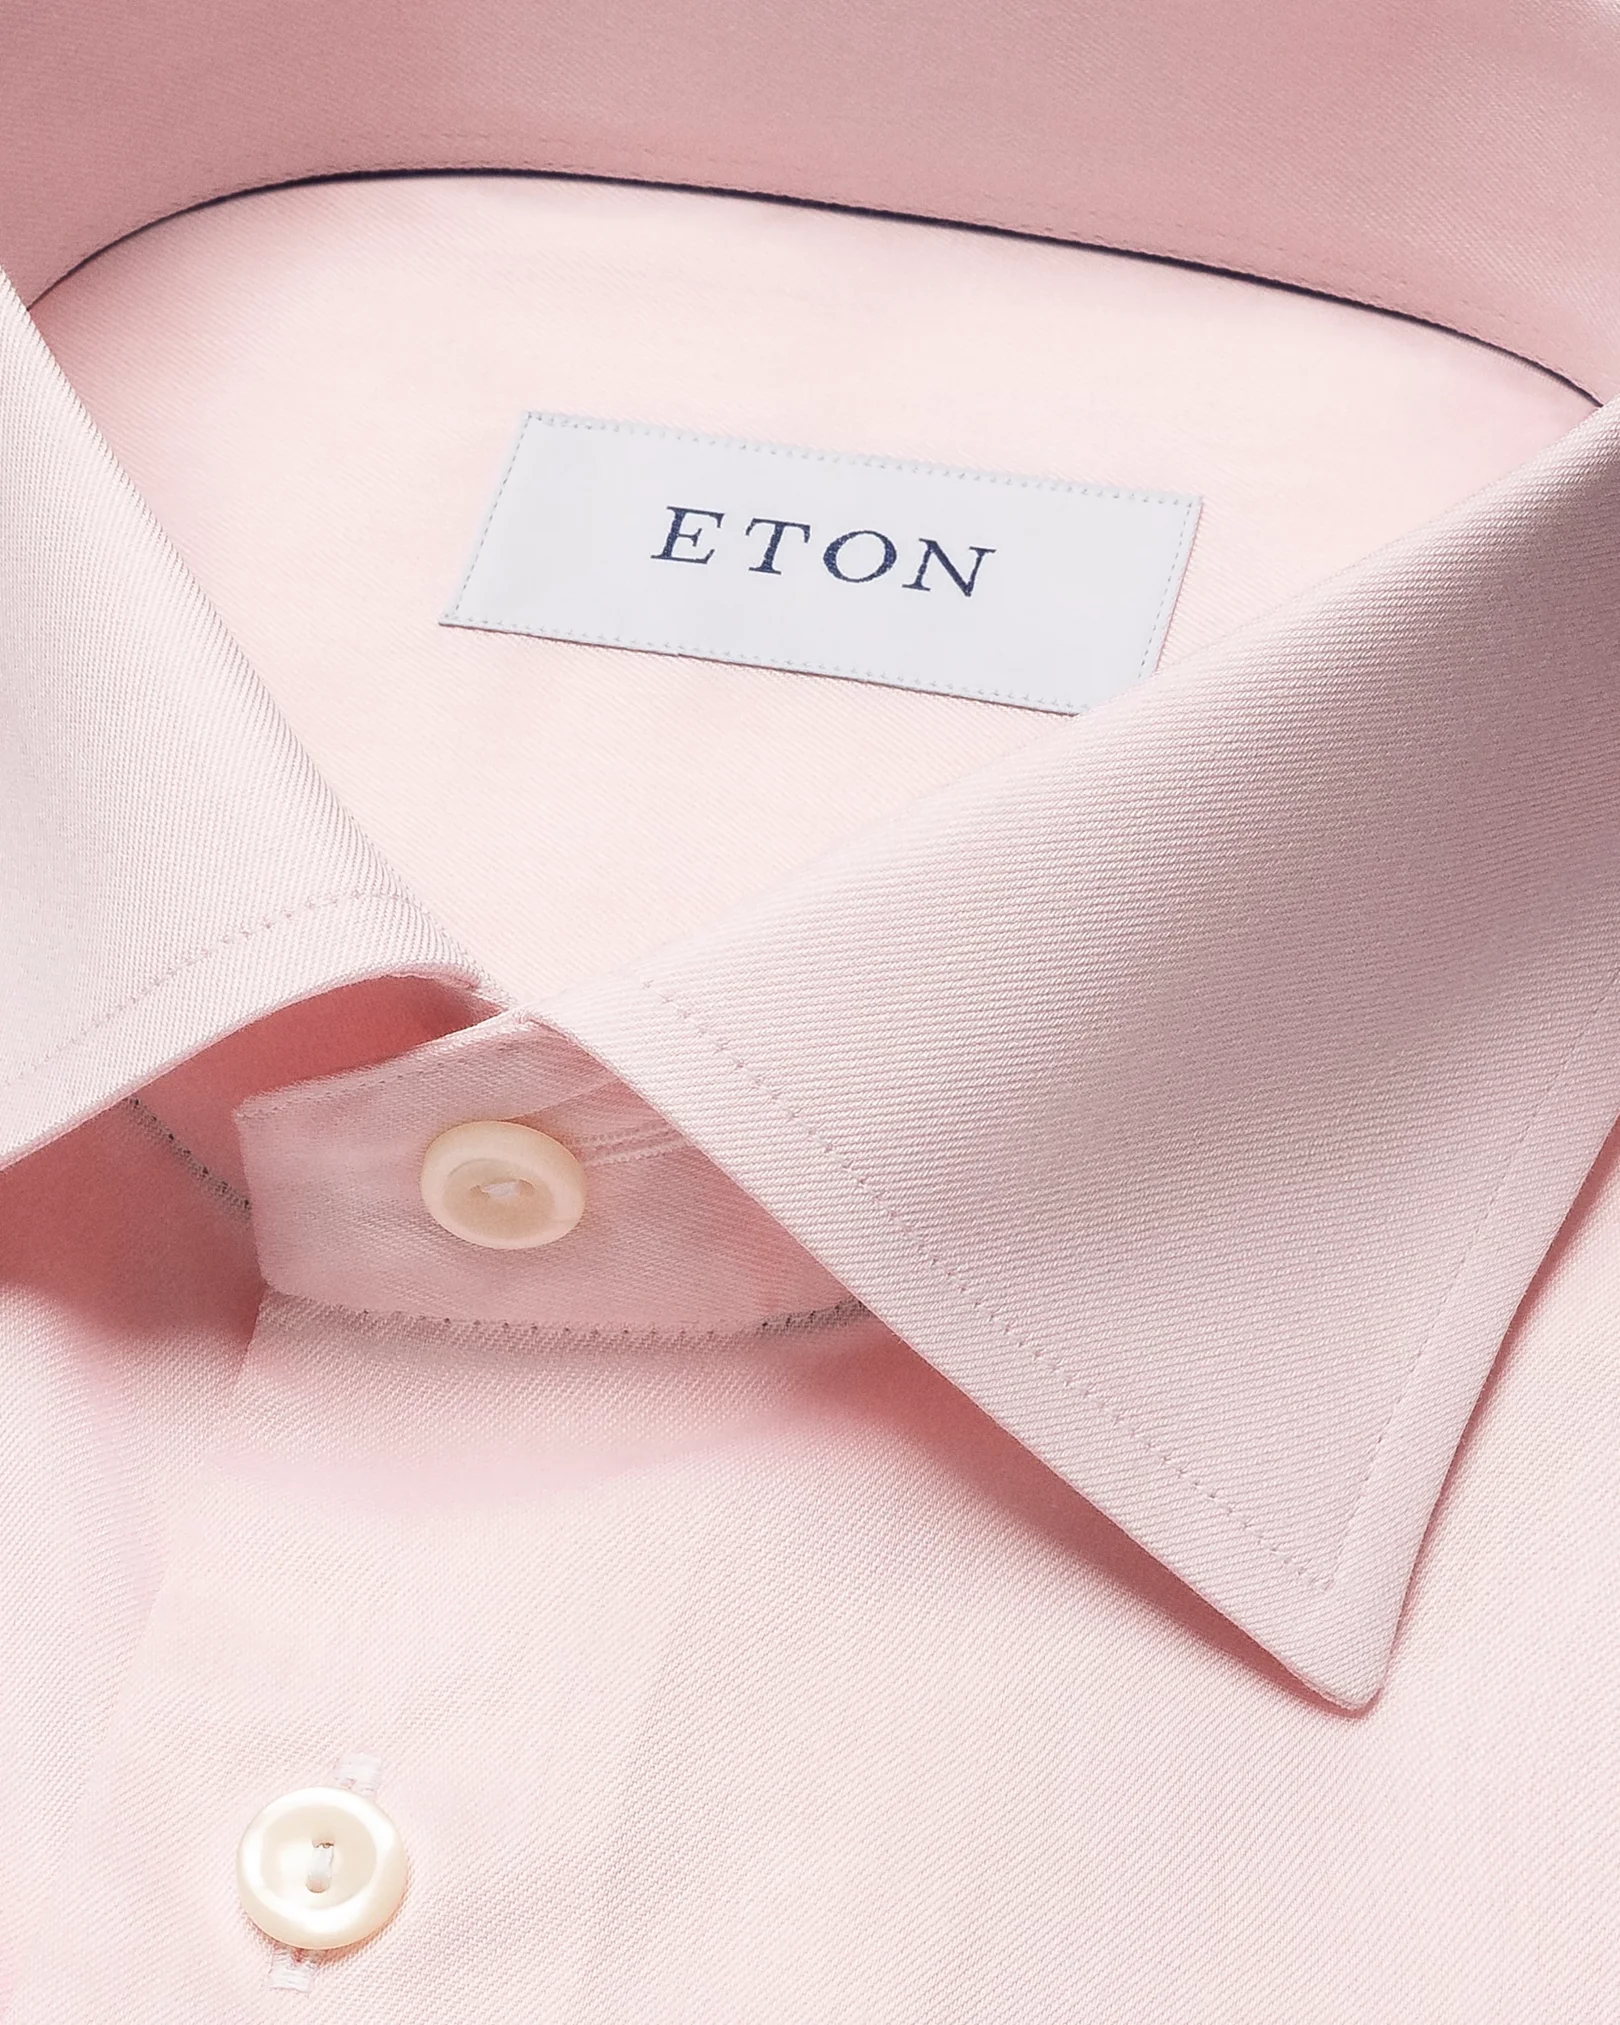 Eton - pink shirt signature twill